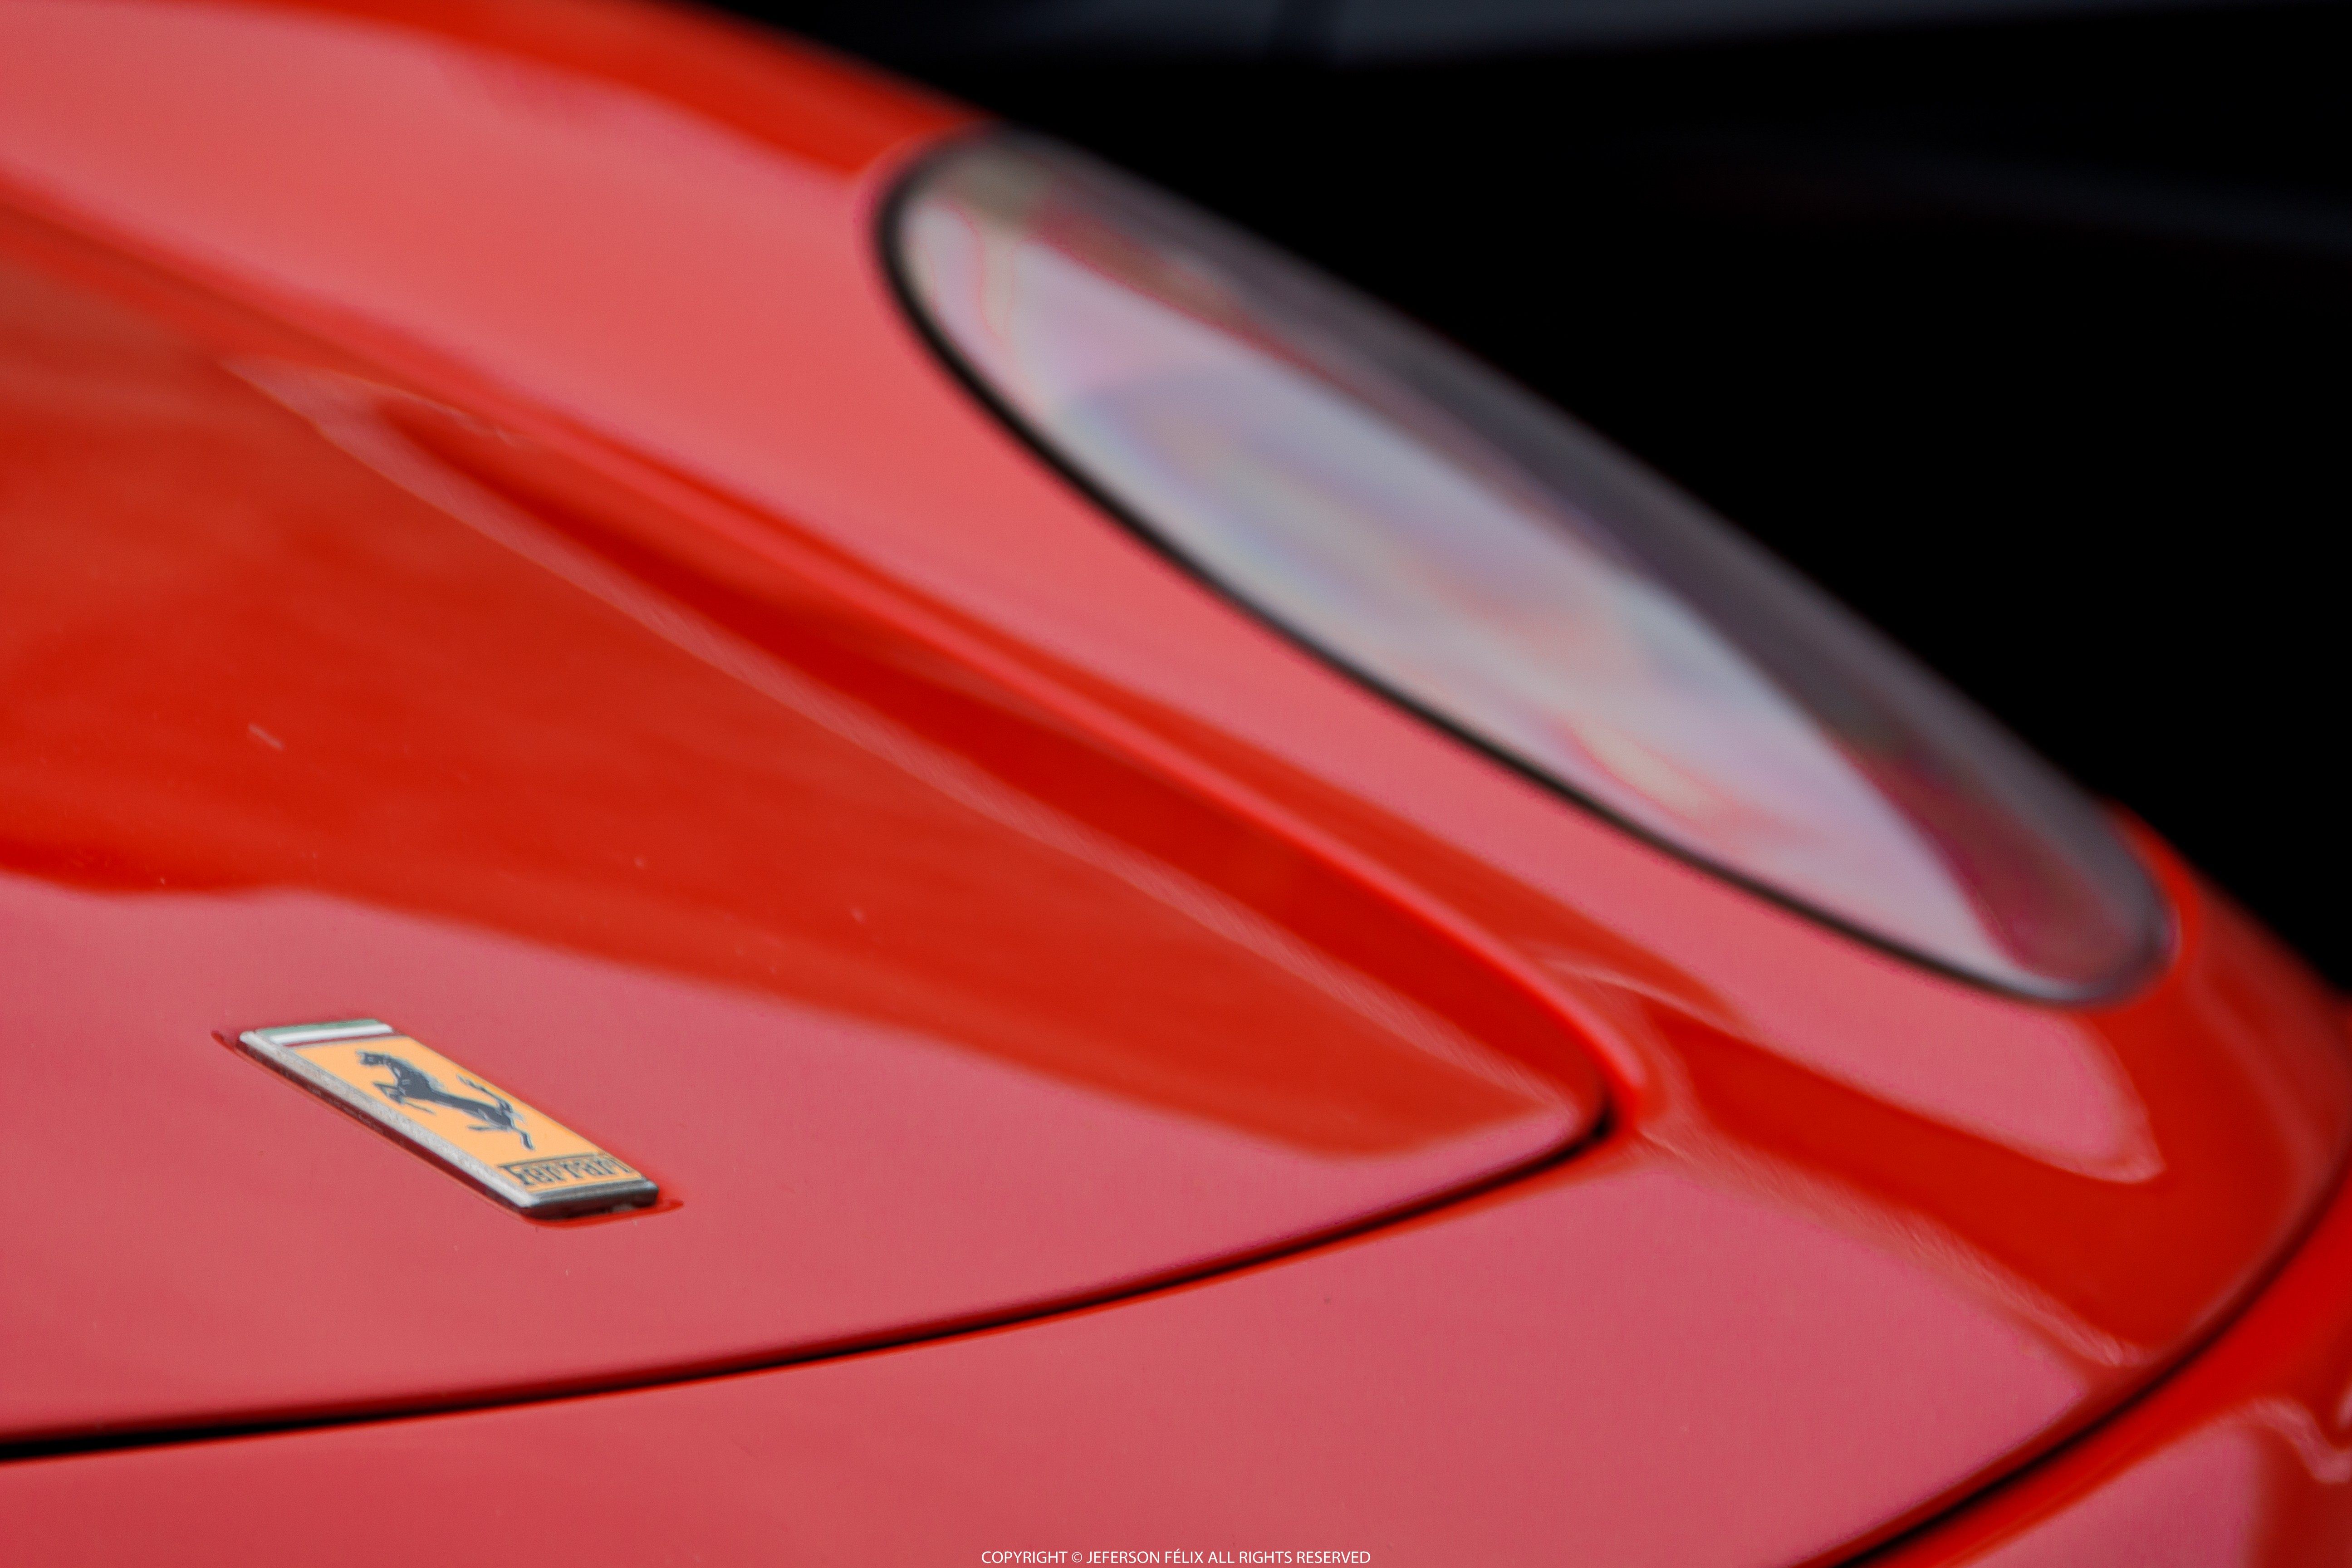 General 5184x3456 red cars car vehicle Ferrari Ferrari 360 logo